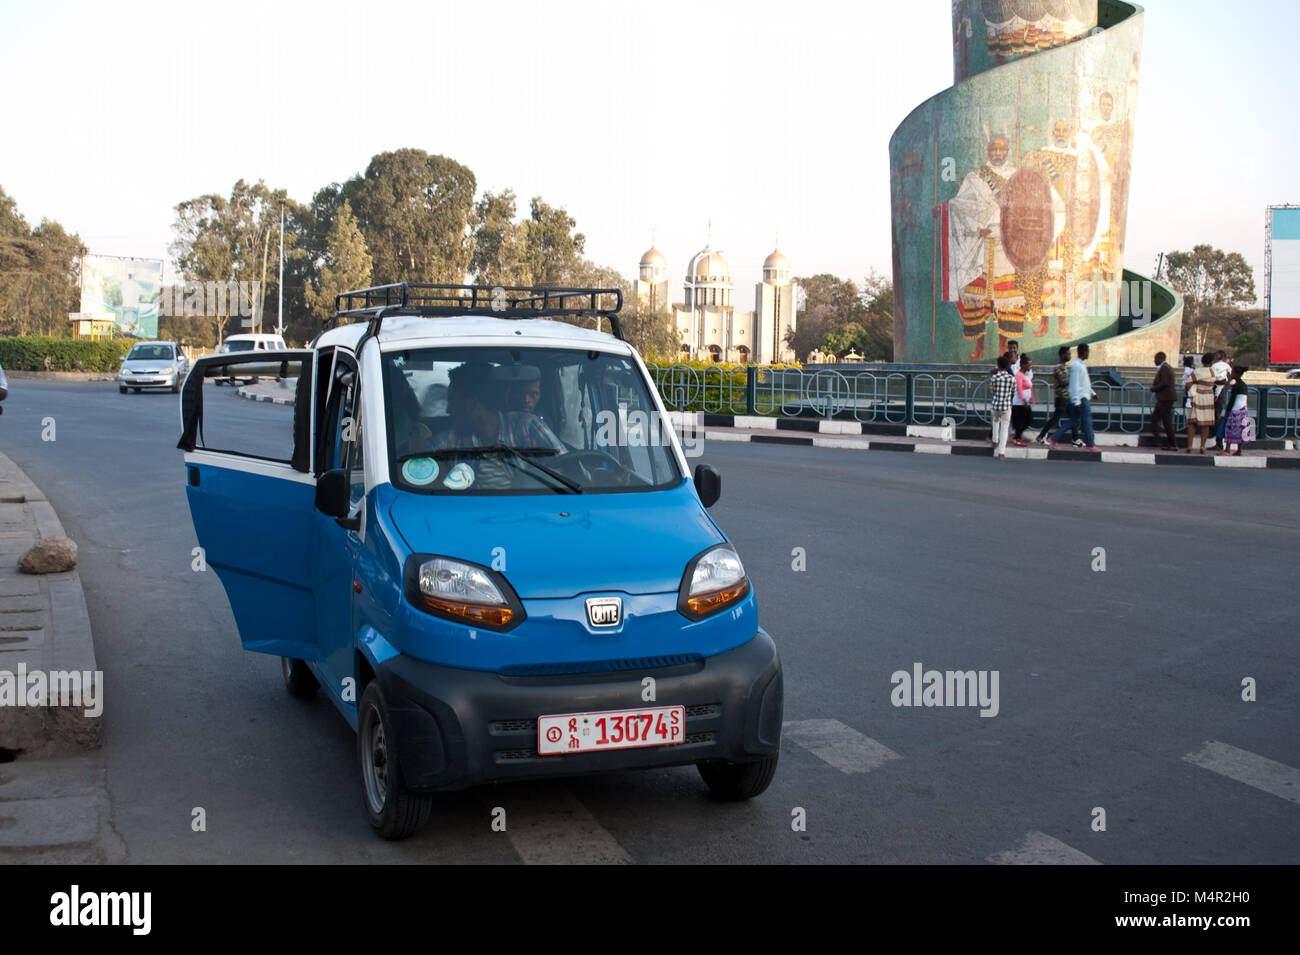 Bajaj Qute used as a cab in Ethiopia Stock Photo